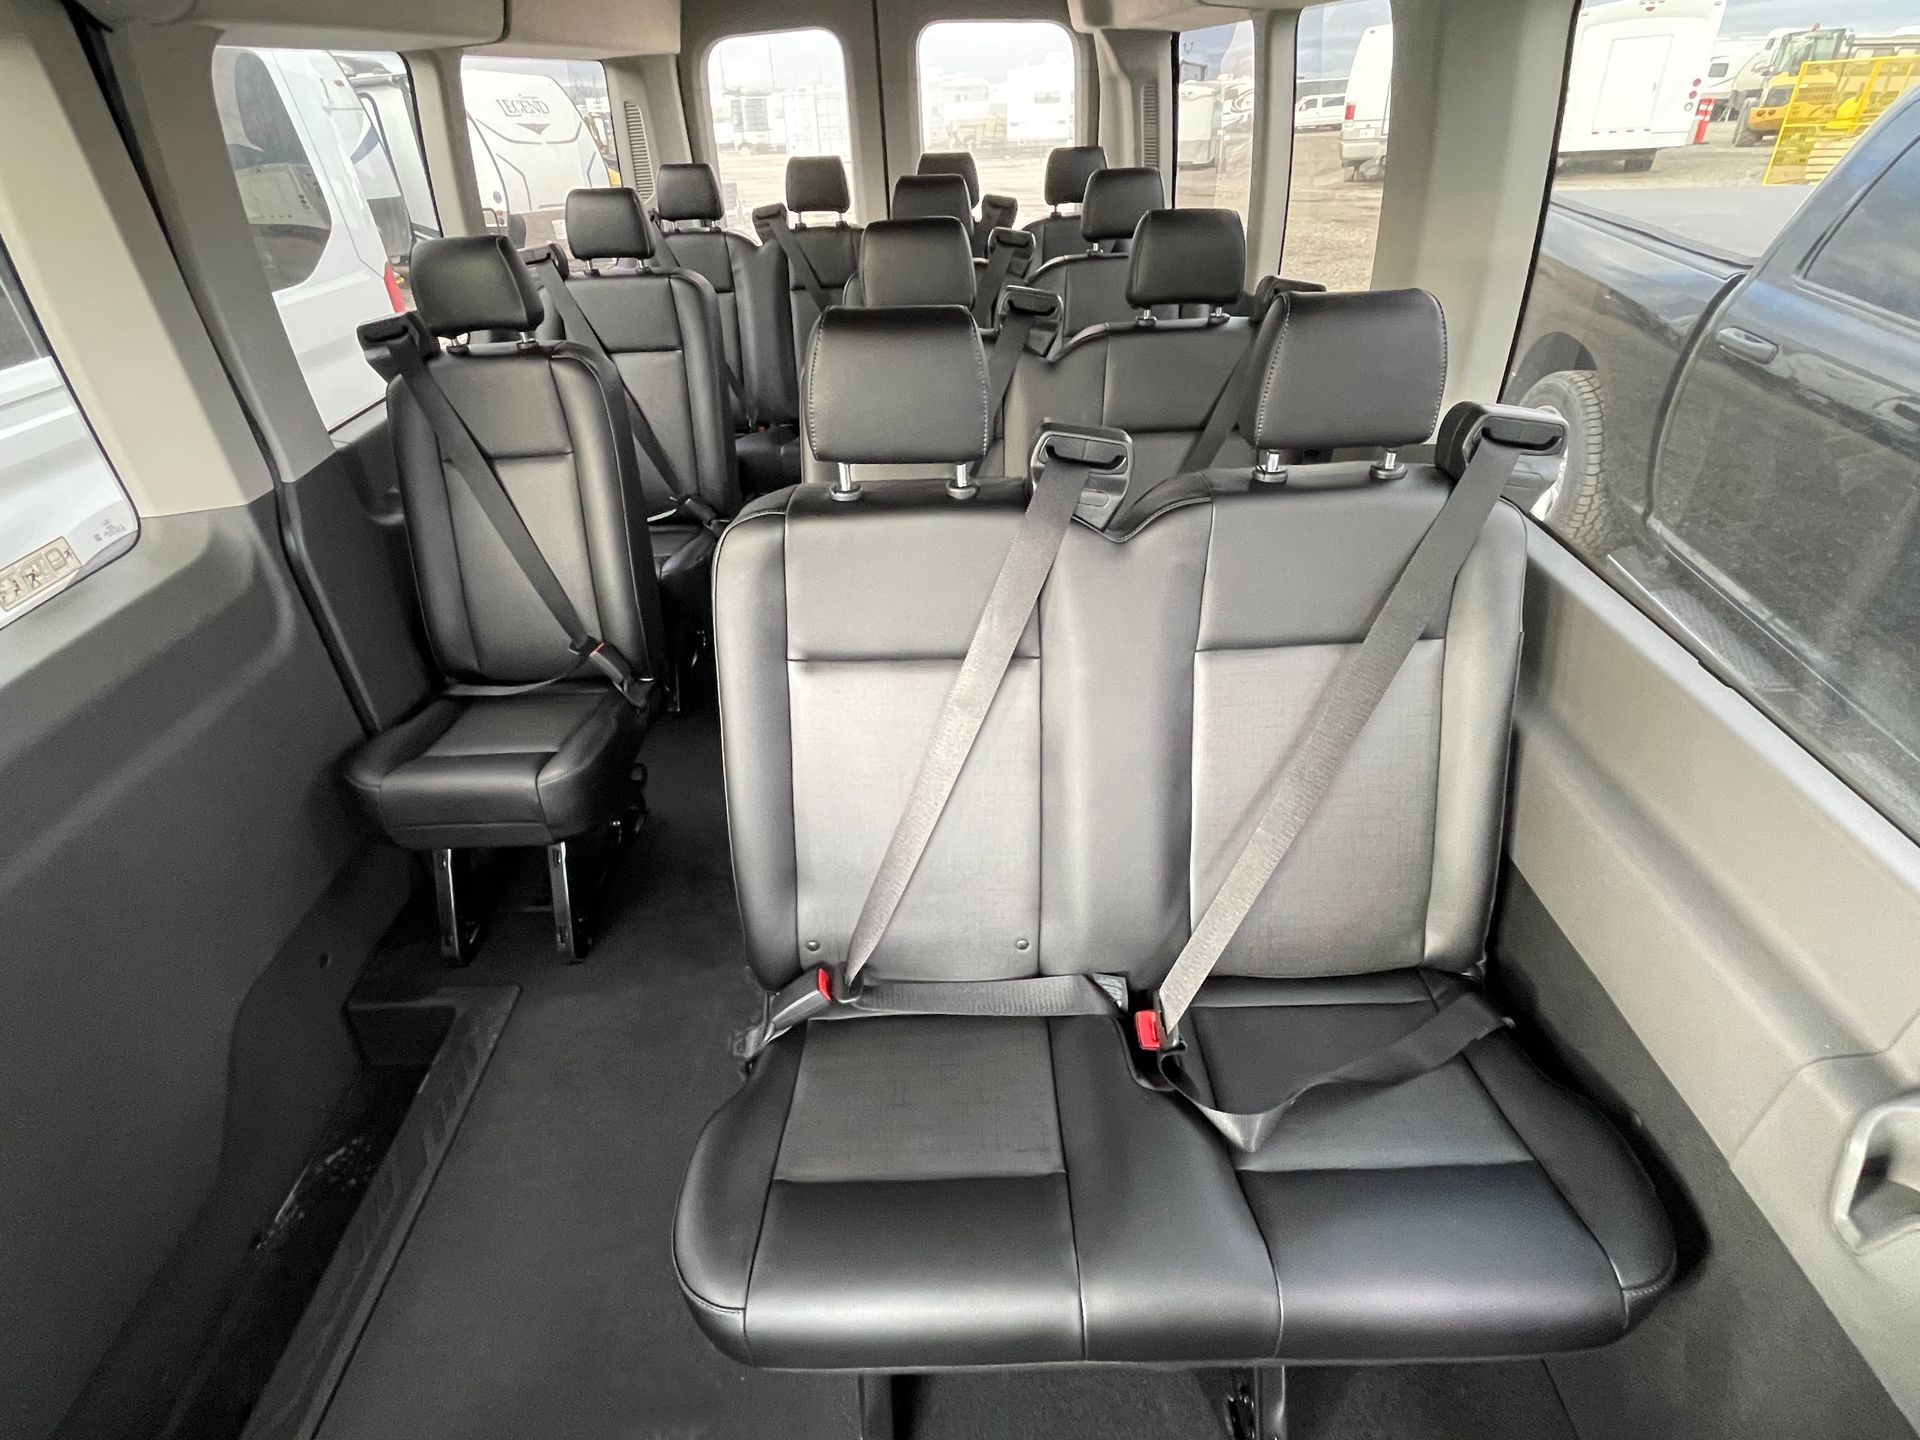 transit shuttle bus interior full seating